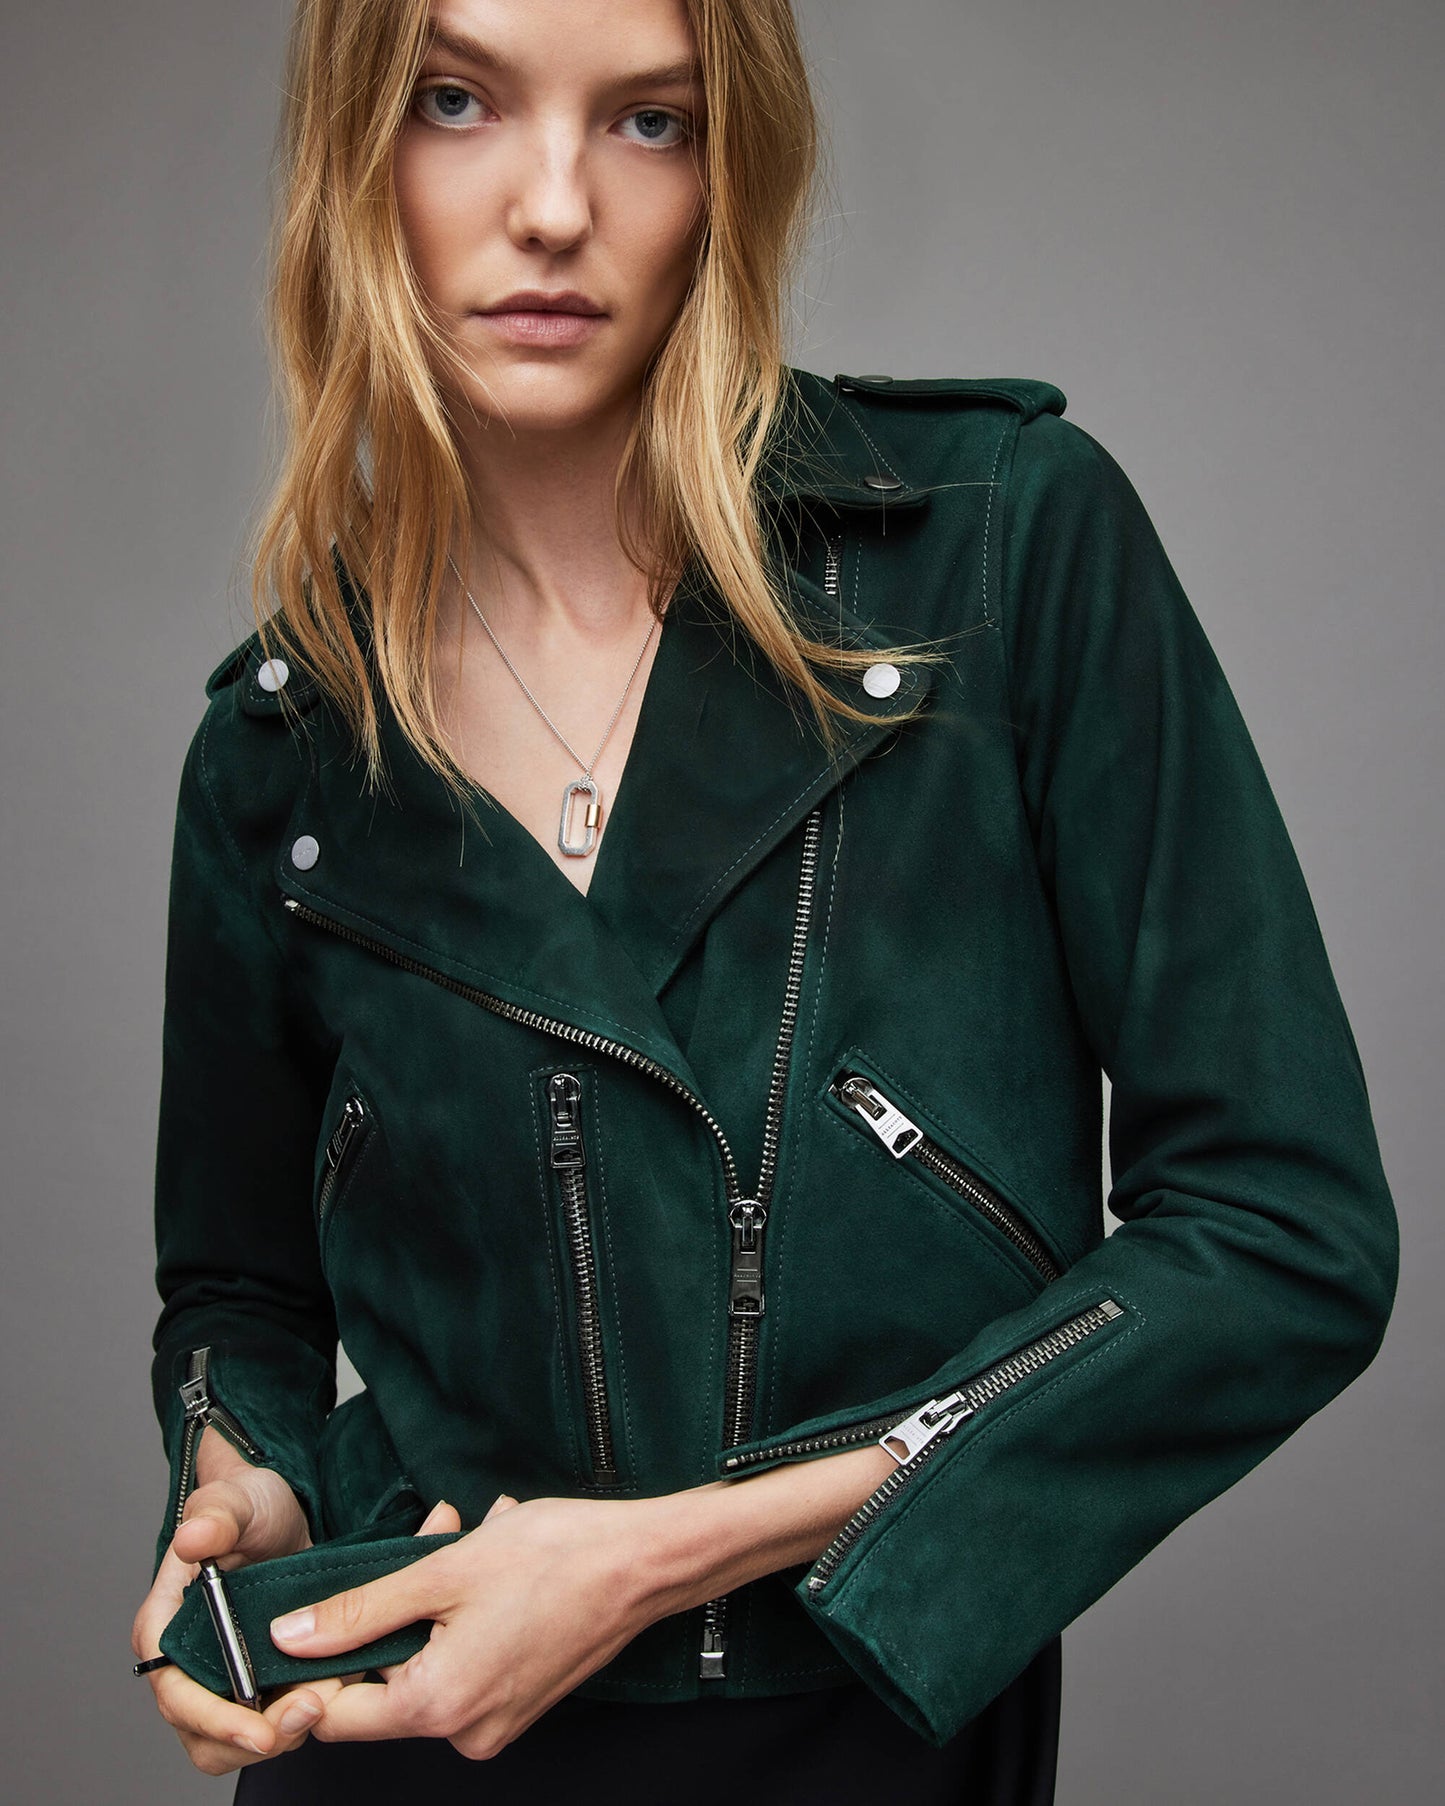 Women's Biker Leather Jacket In Royal Green With Belt